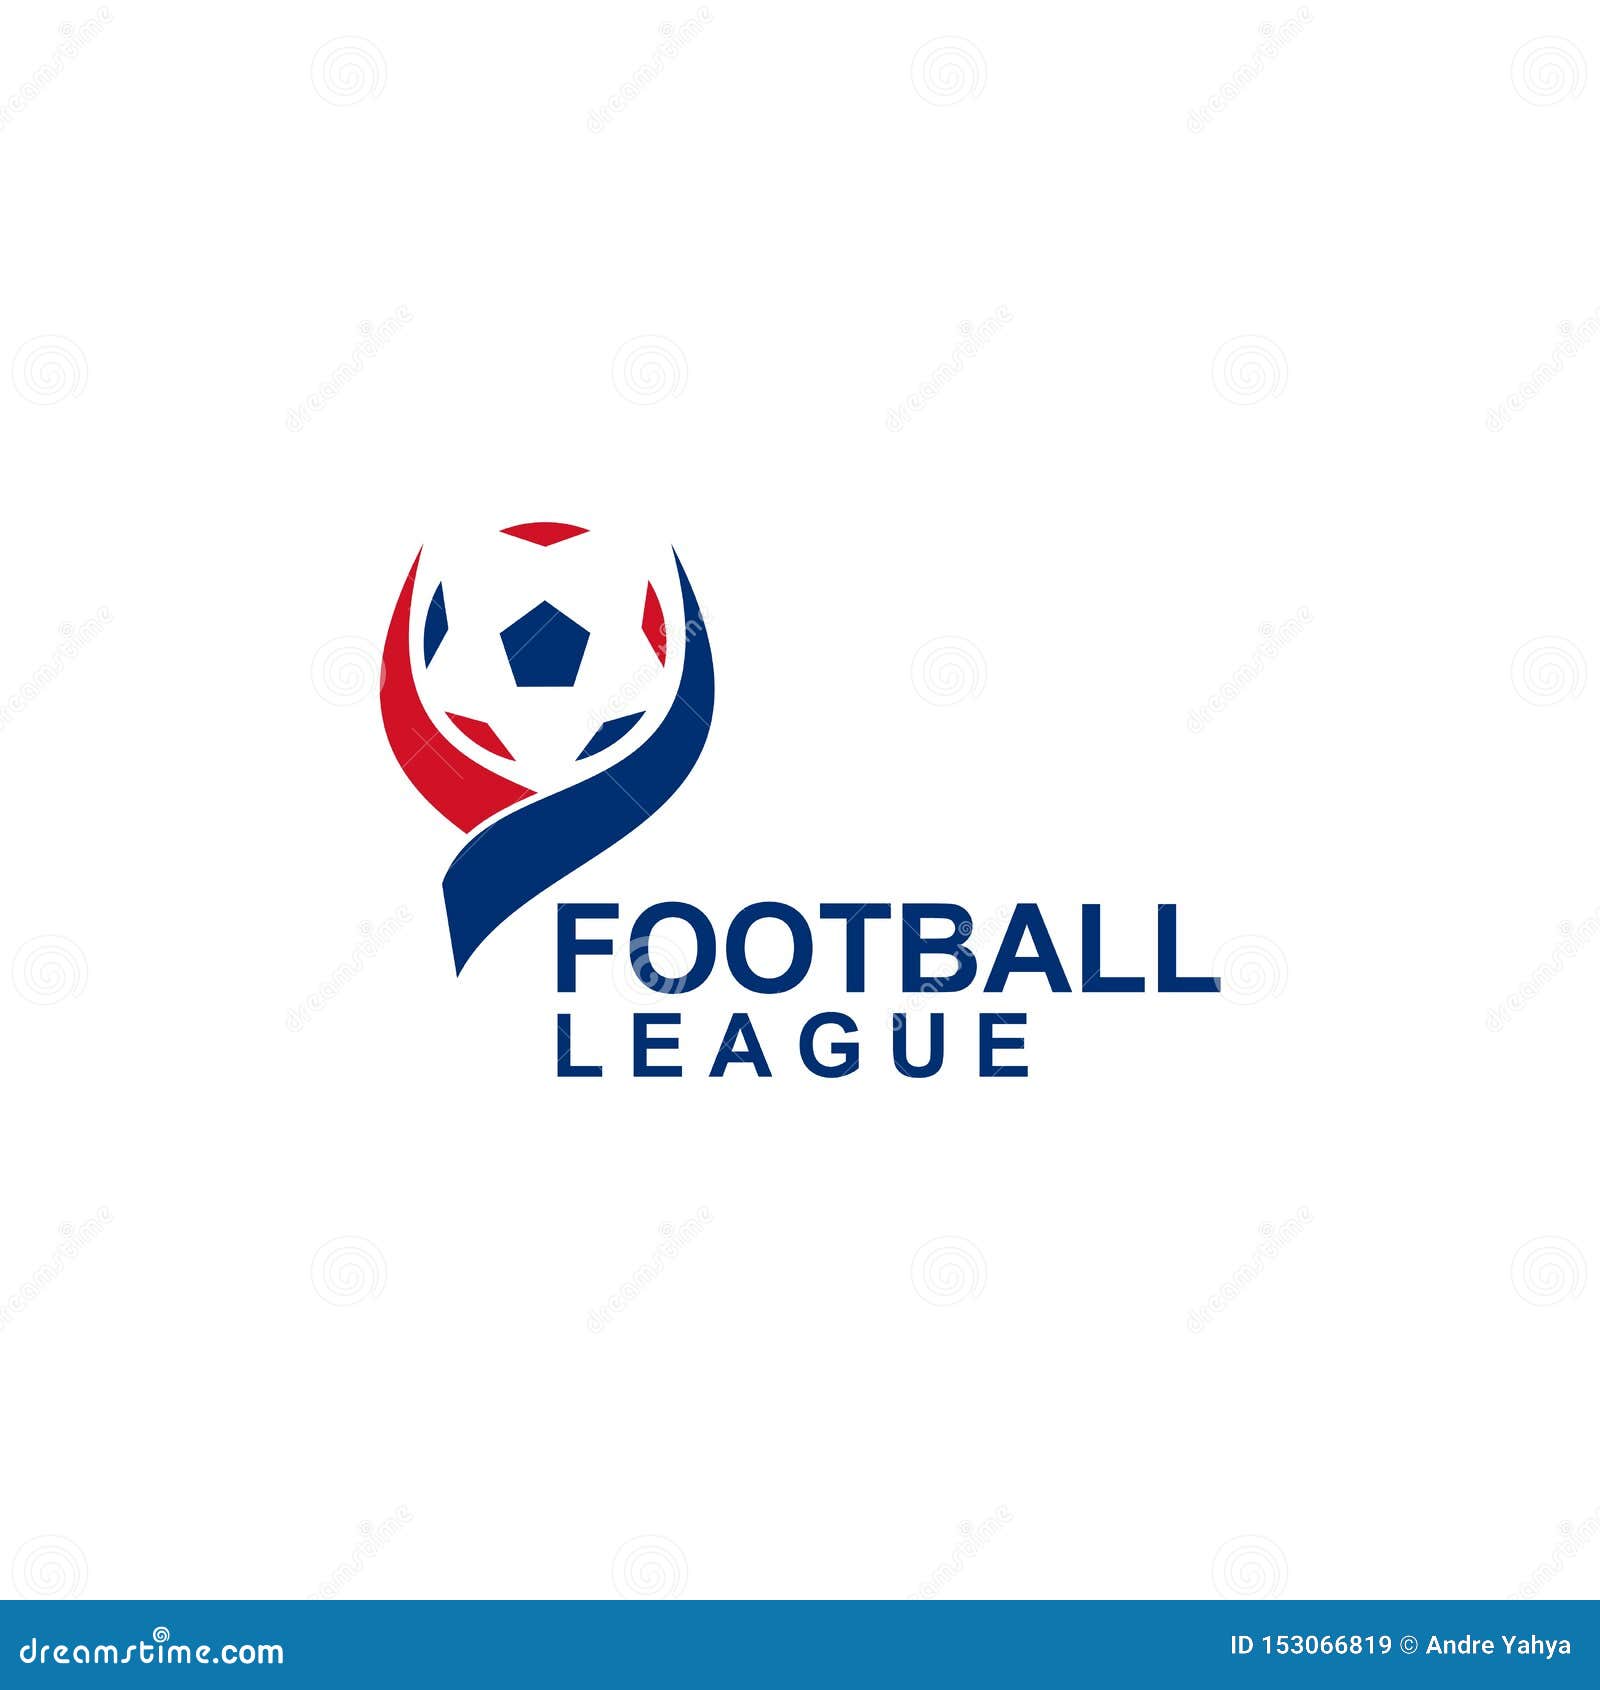 Soccer Logo, Football Design Vector Sports, Template Stock ...